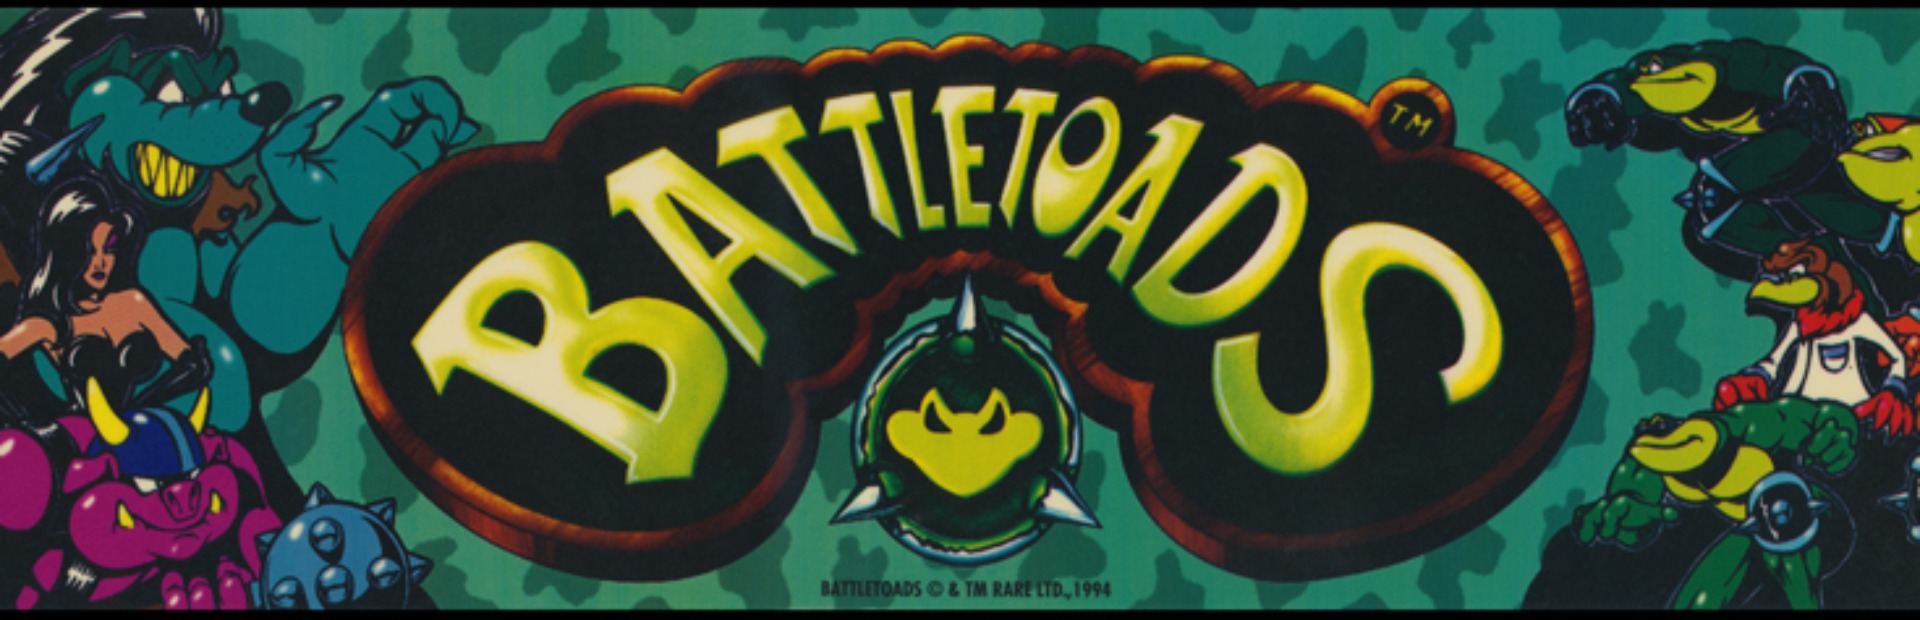 Battletoads жанр. Батлтоадс Раш. Battletoads Arcade. Игровой автомат Battletoads.